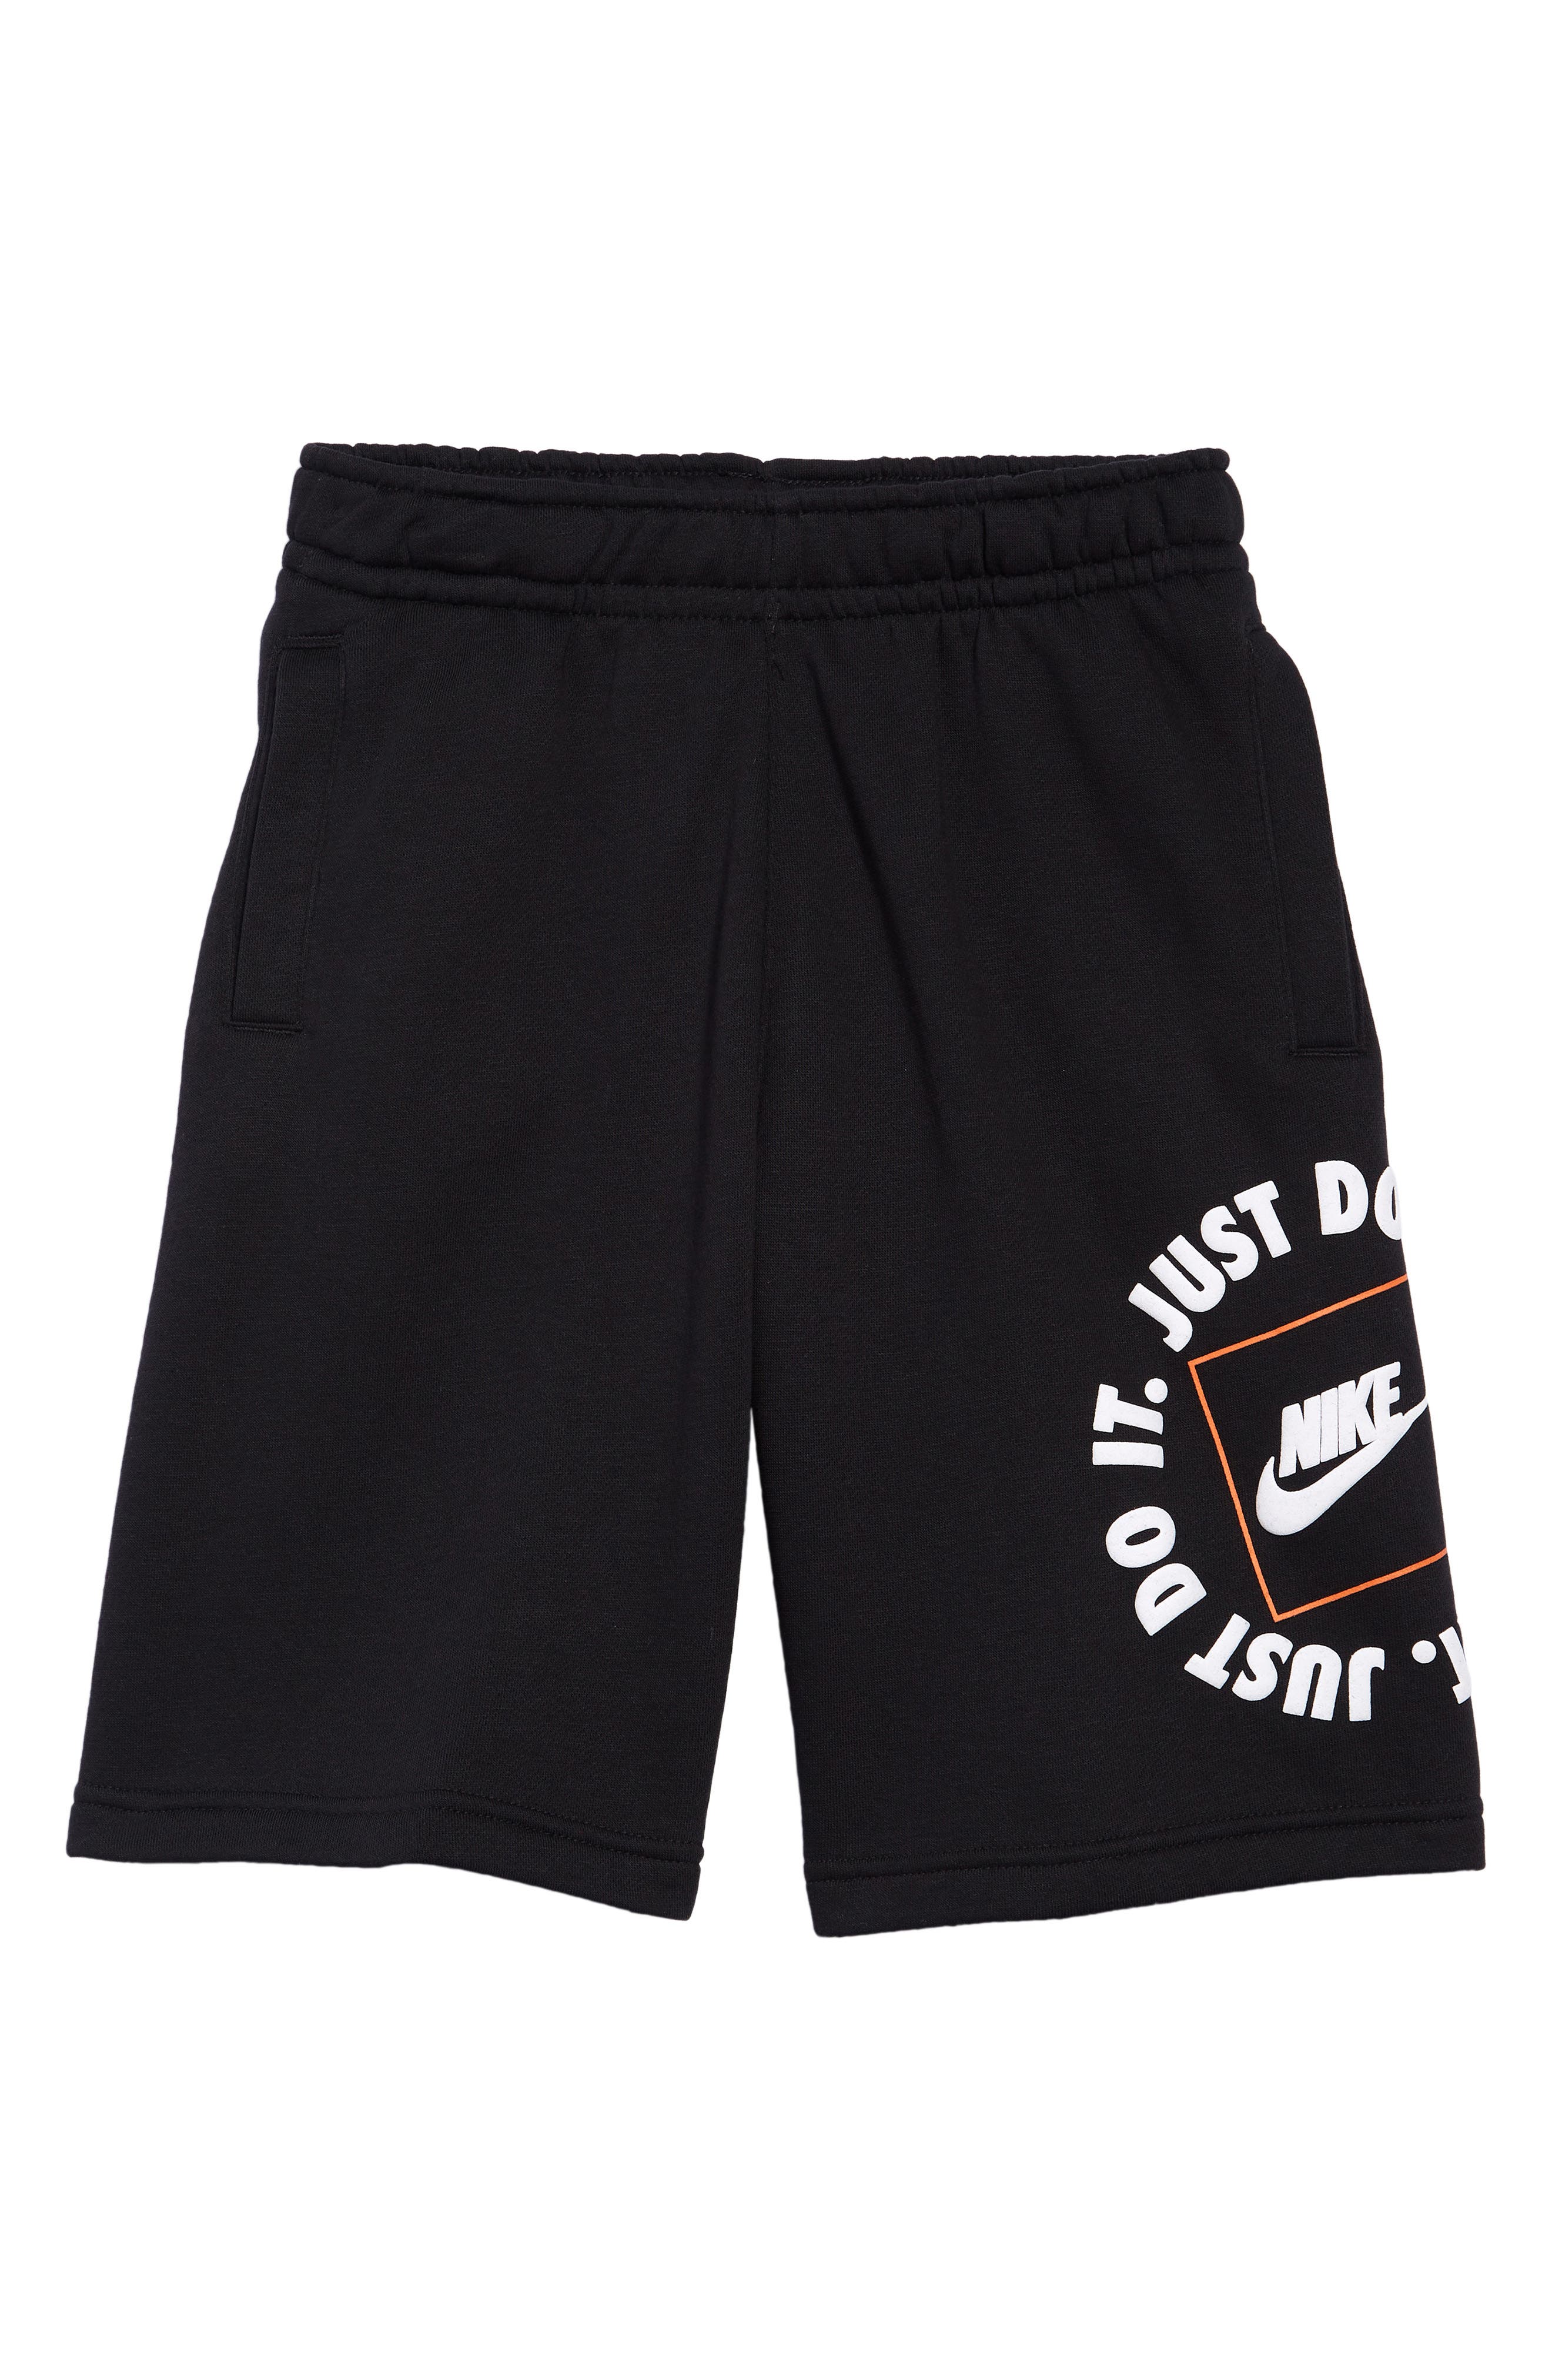 black nike shorts for boys